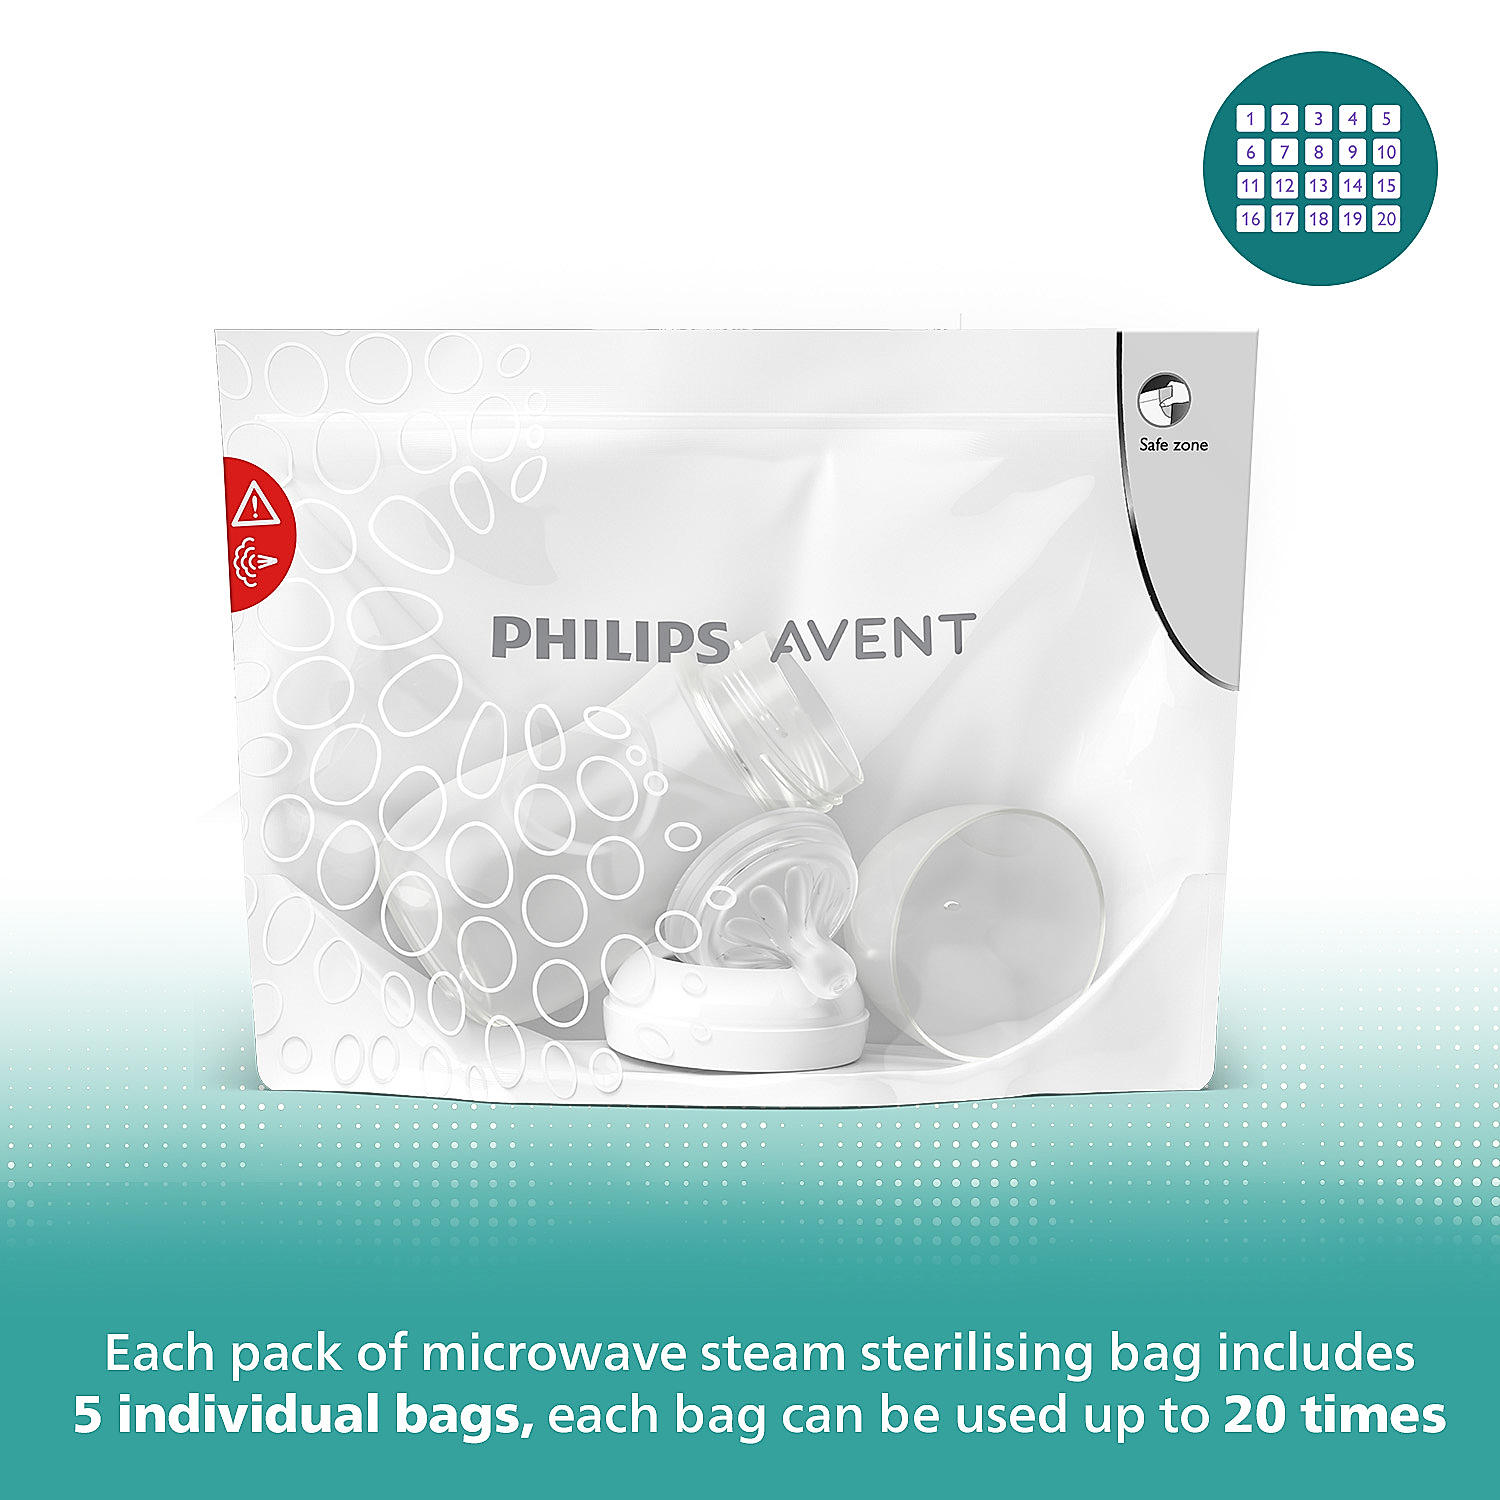 Philips Avent at Bag, Philips E-shop Microwave Buy SCF297/05 Sterilizing Online